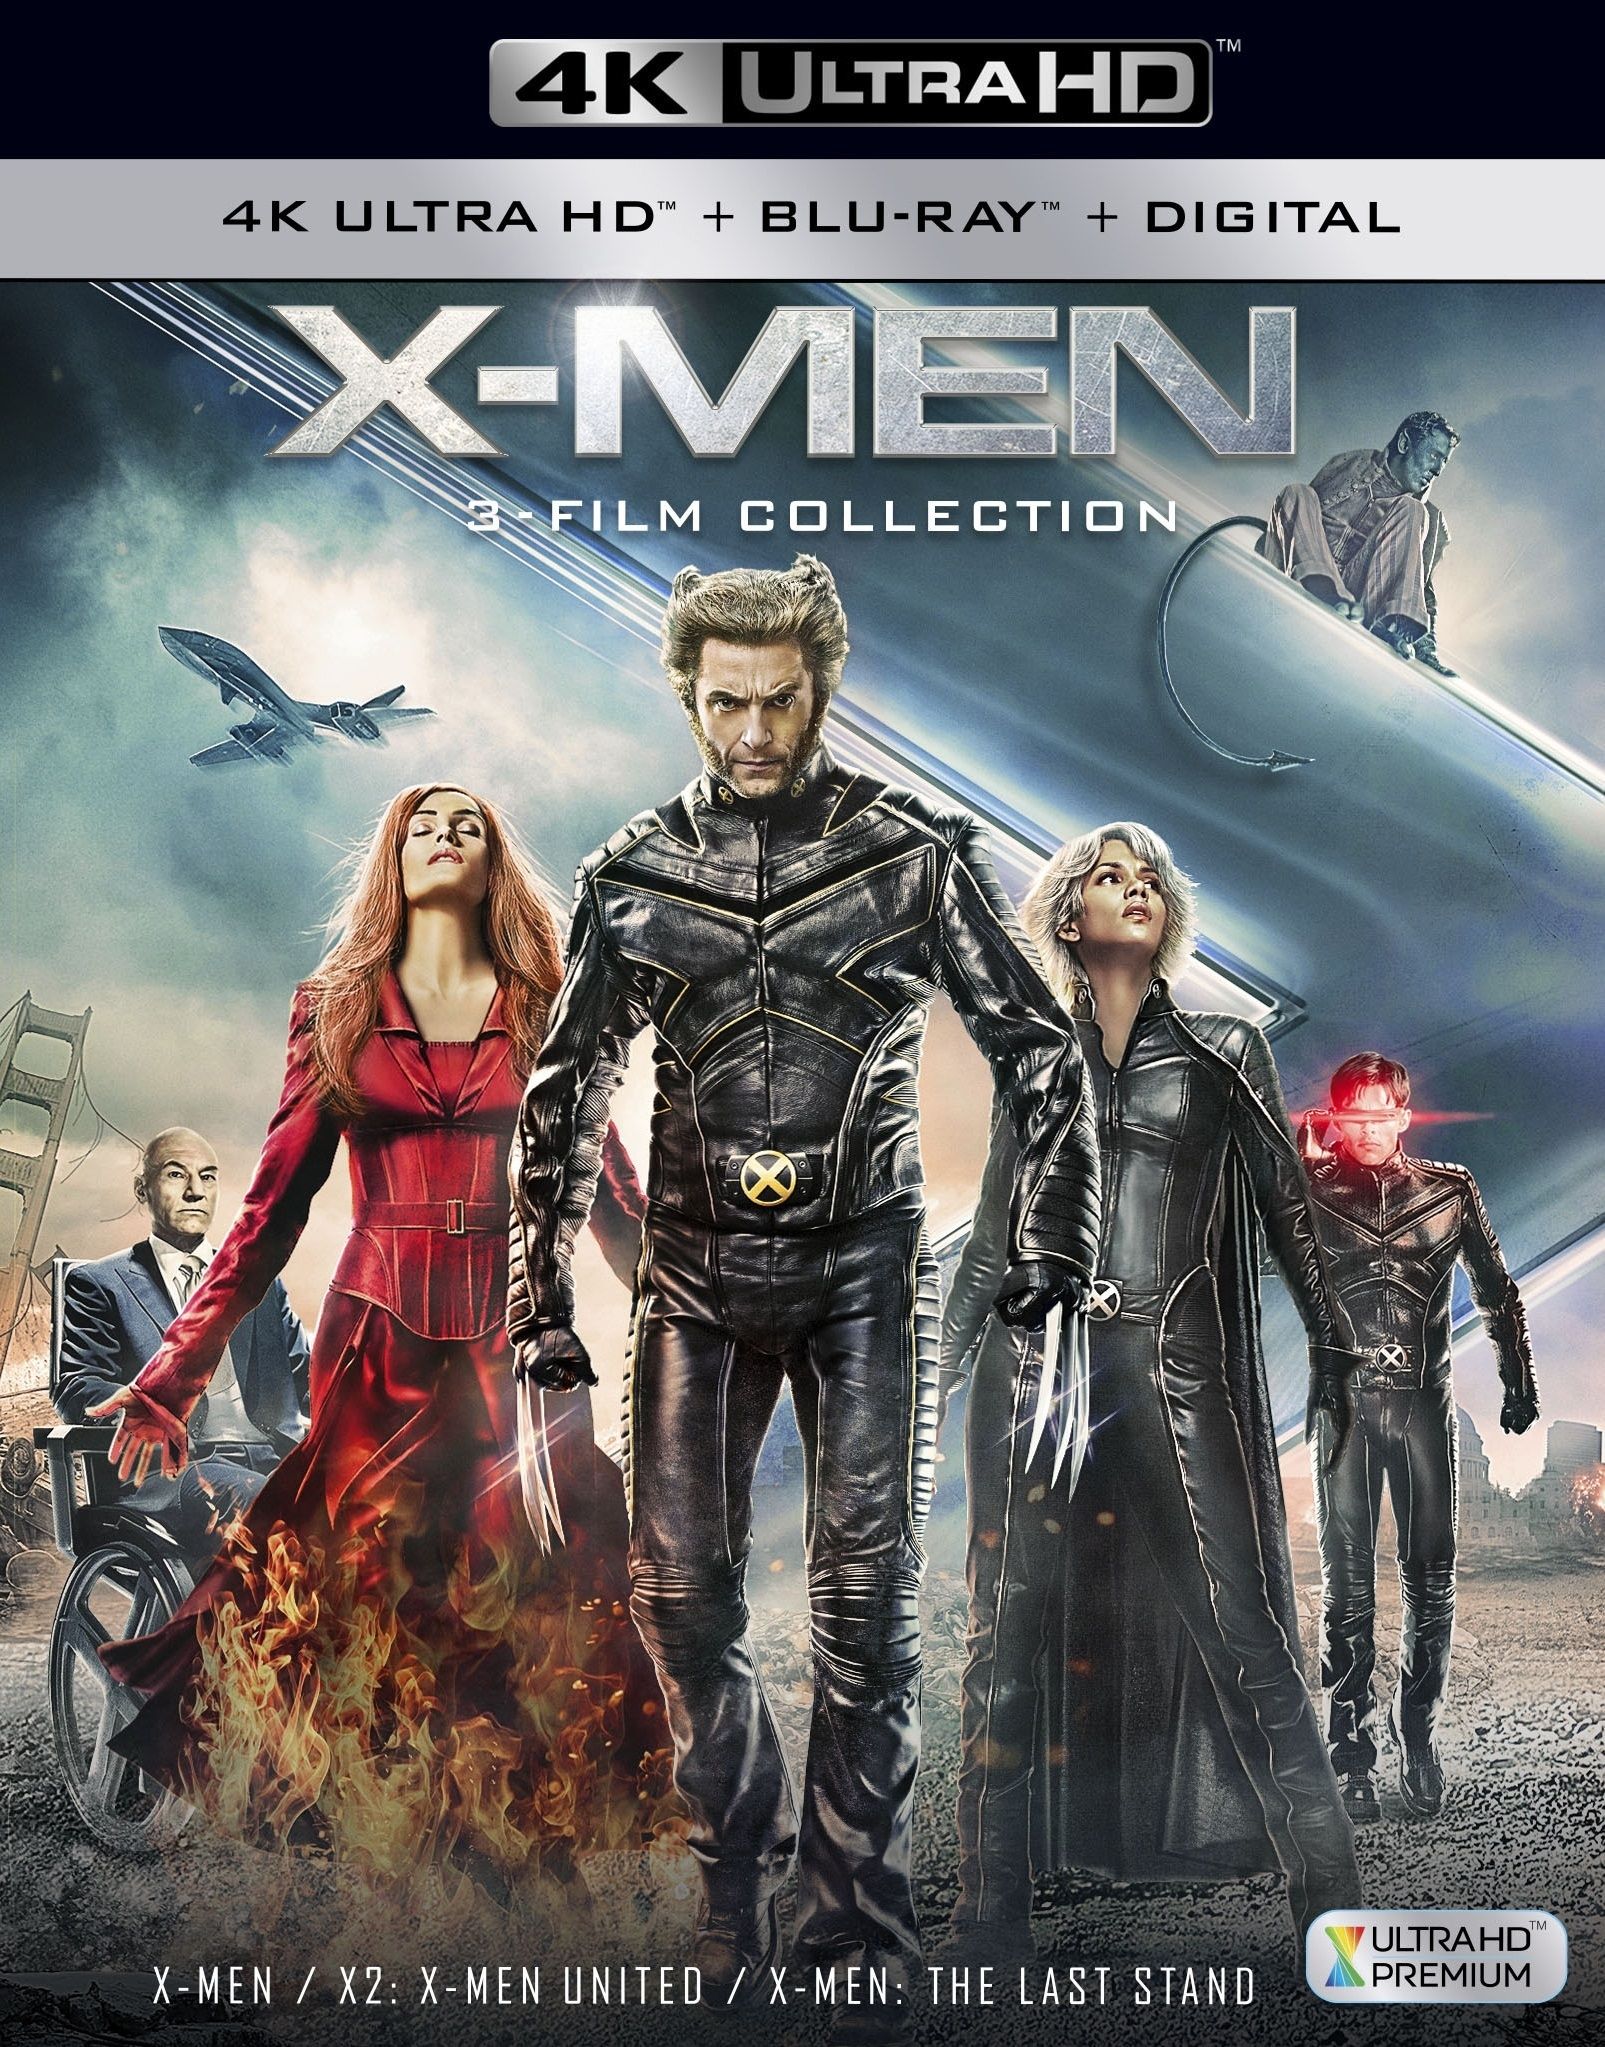 X-Men 4K Ultra HD box art